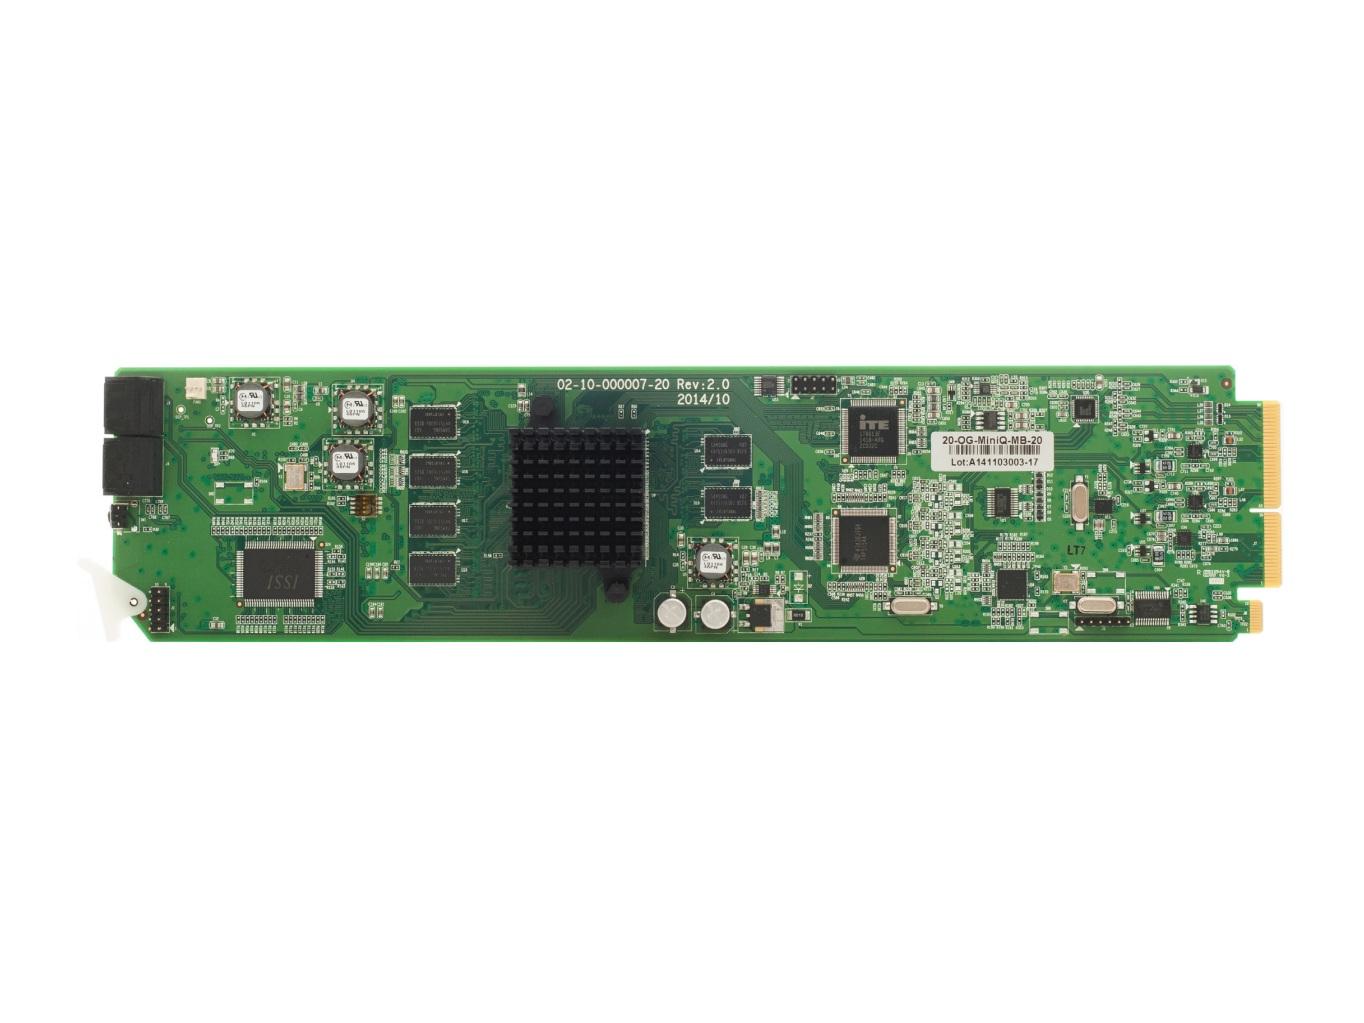 Apantac OG-Pinnacle-C-SET-1 3G/HD/SD-SDI to HDMI Converter w Rear Module